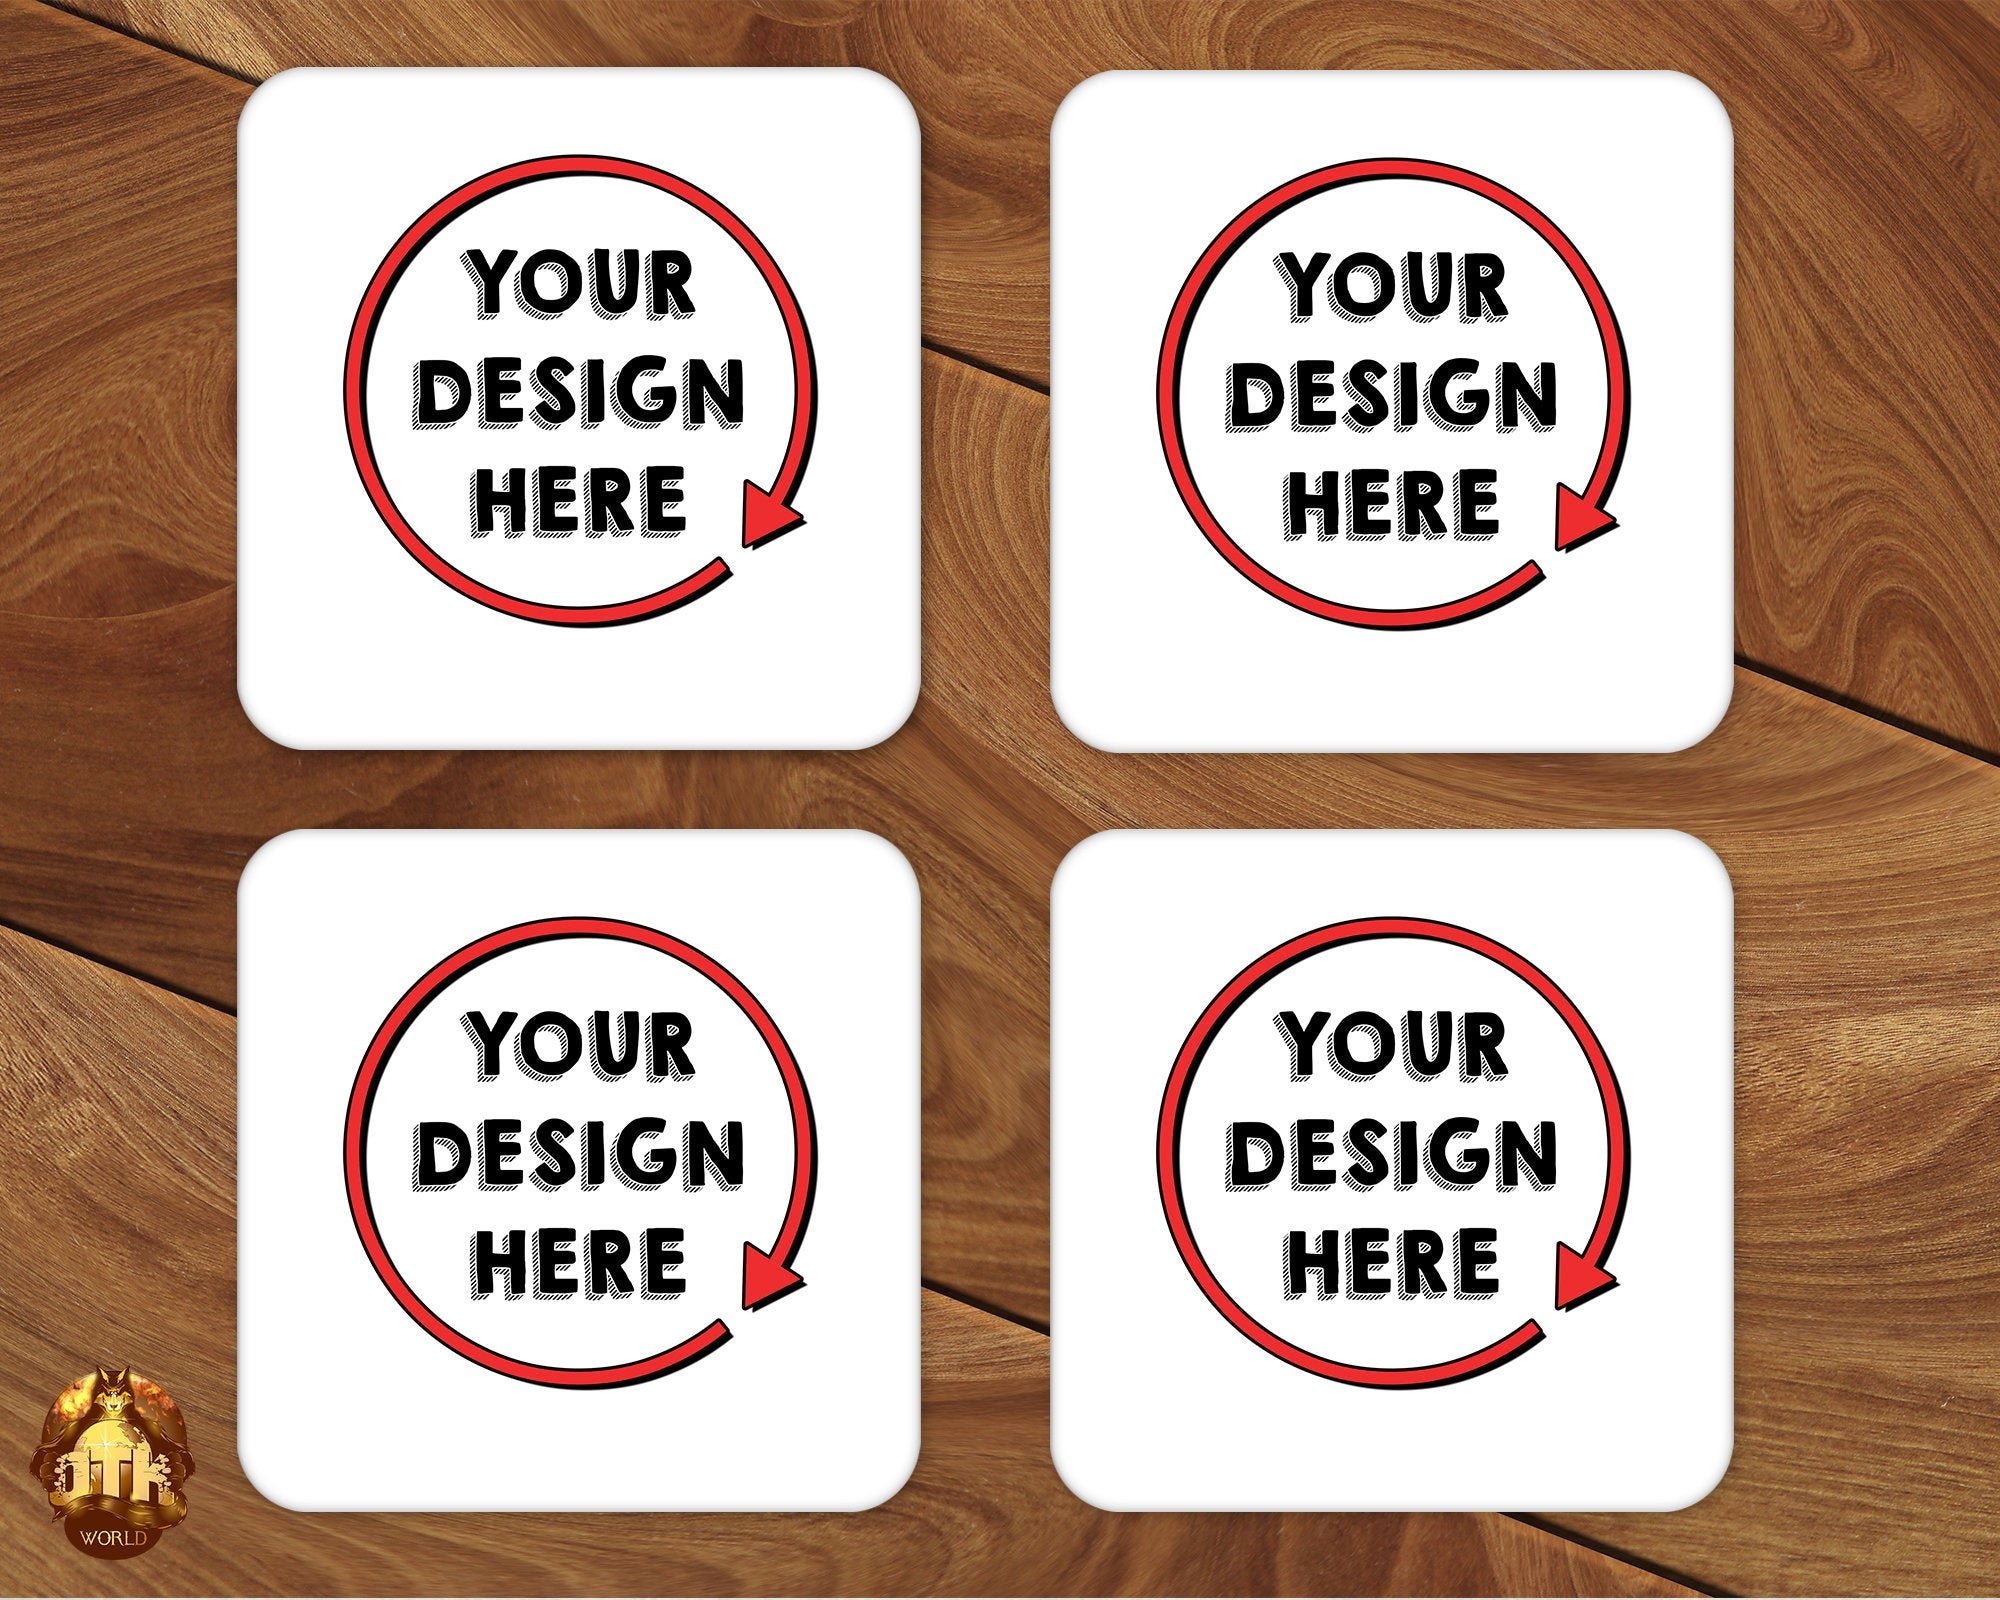 Personalized Photo Coasters - Custom Hardboard Coasters - Personalized Barware - Photo Coasters - Add Your Own Photo, Logo & Text